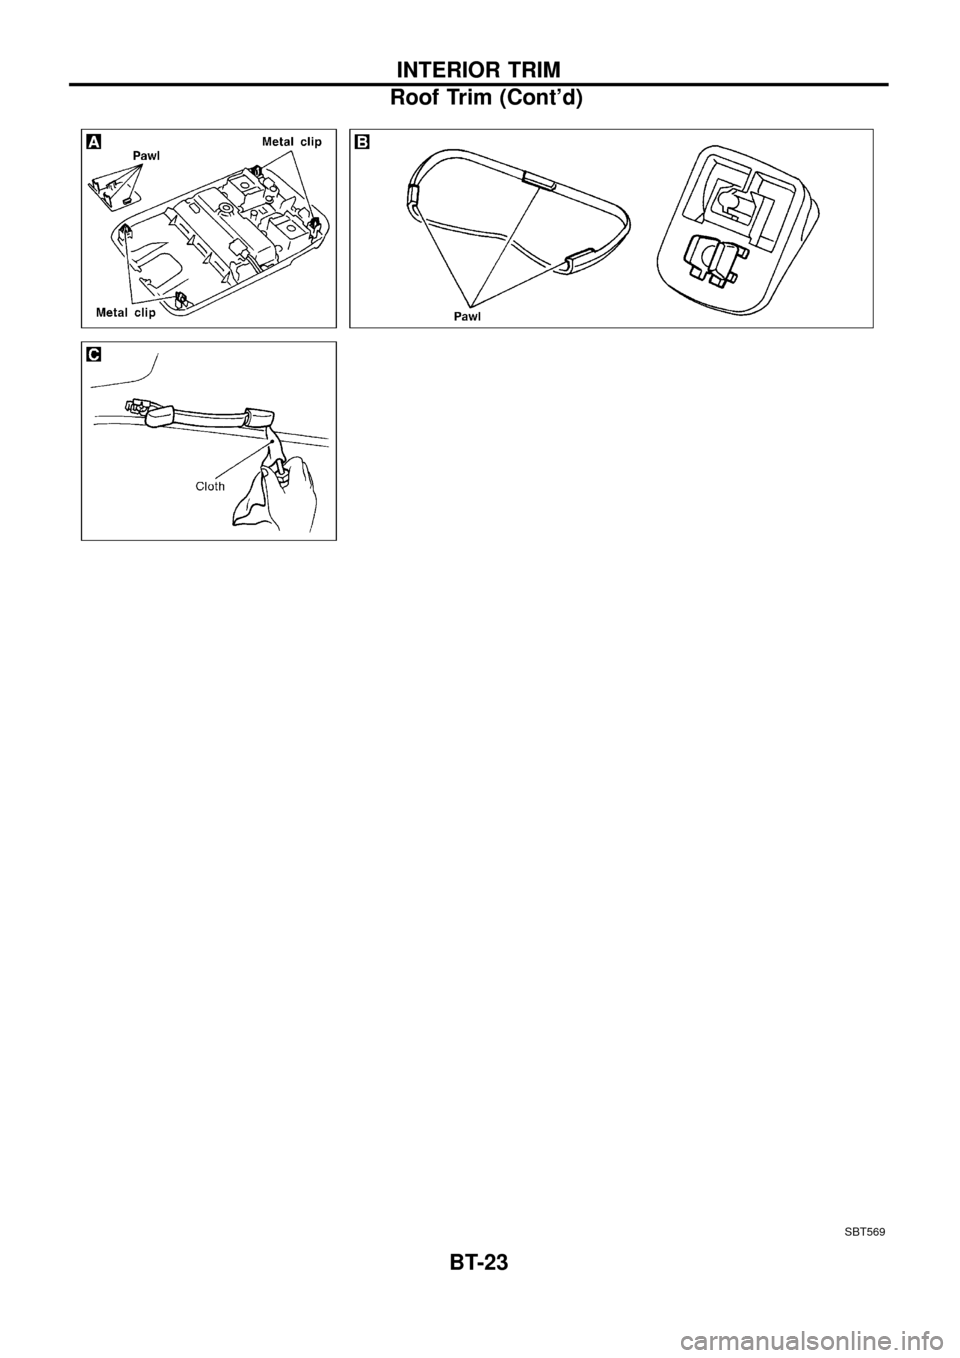 NISSAN PATROL 1998 Y61 / 5.G Body Owners Manual SBT569
INTERIOR TRIM
Roof Trim (Contd)
BT-23 